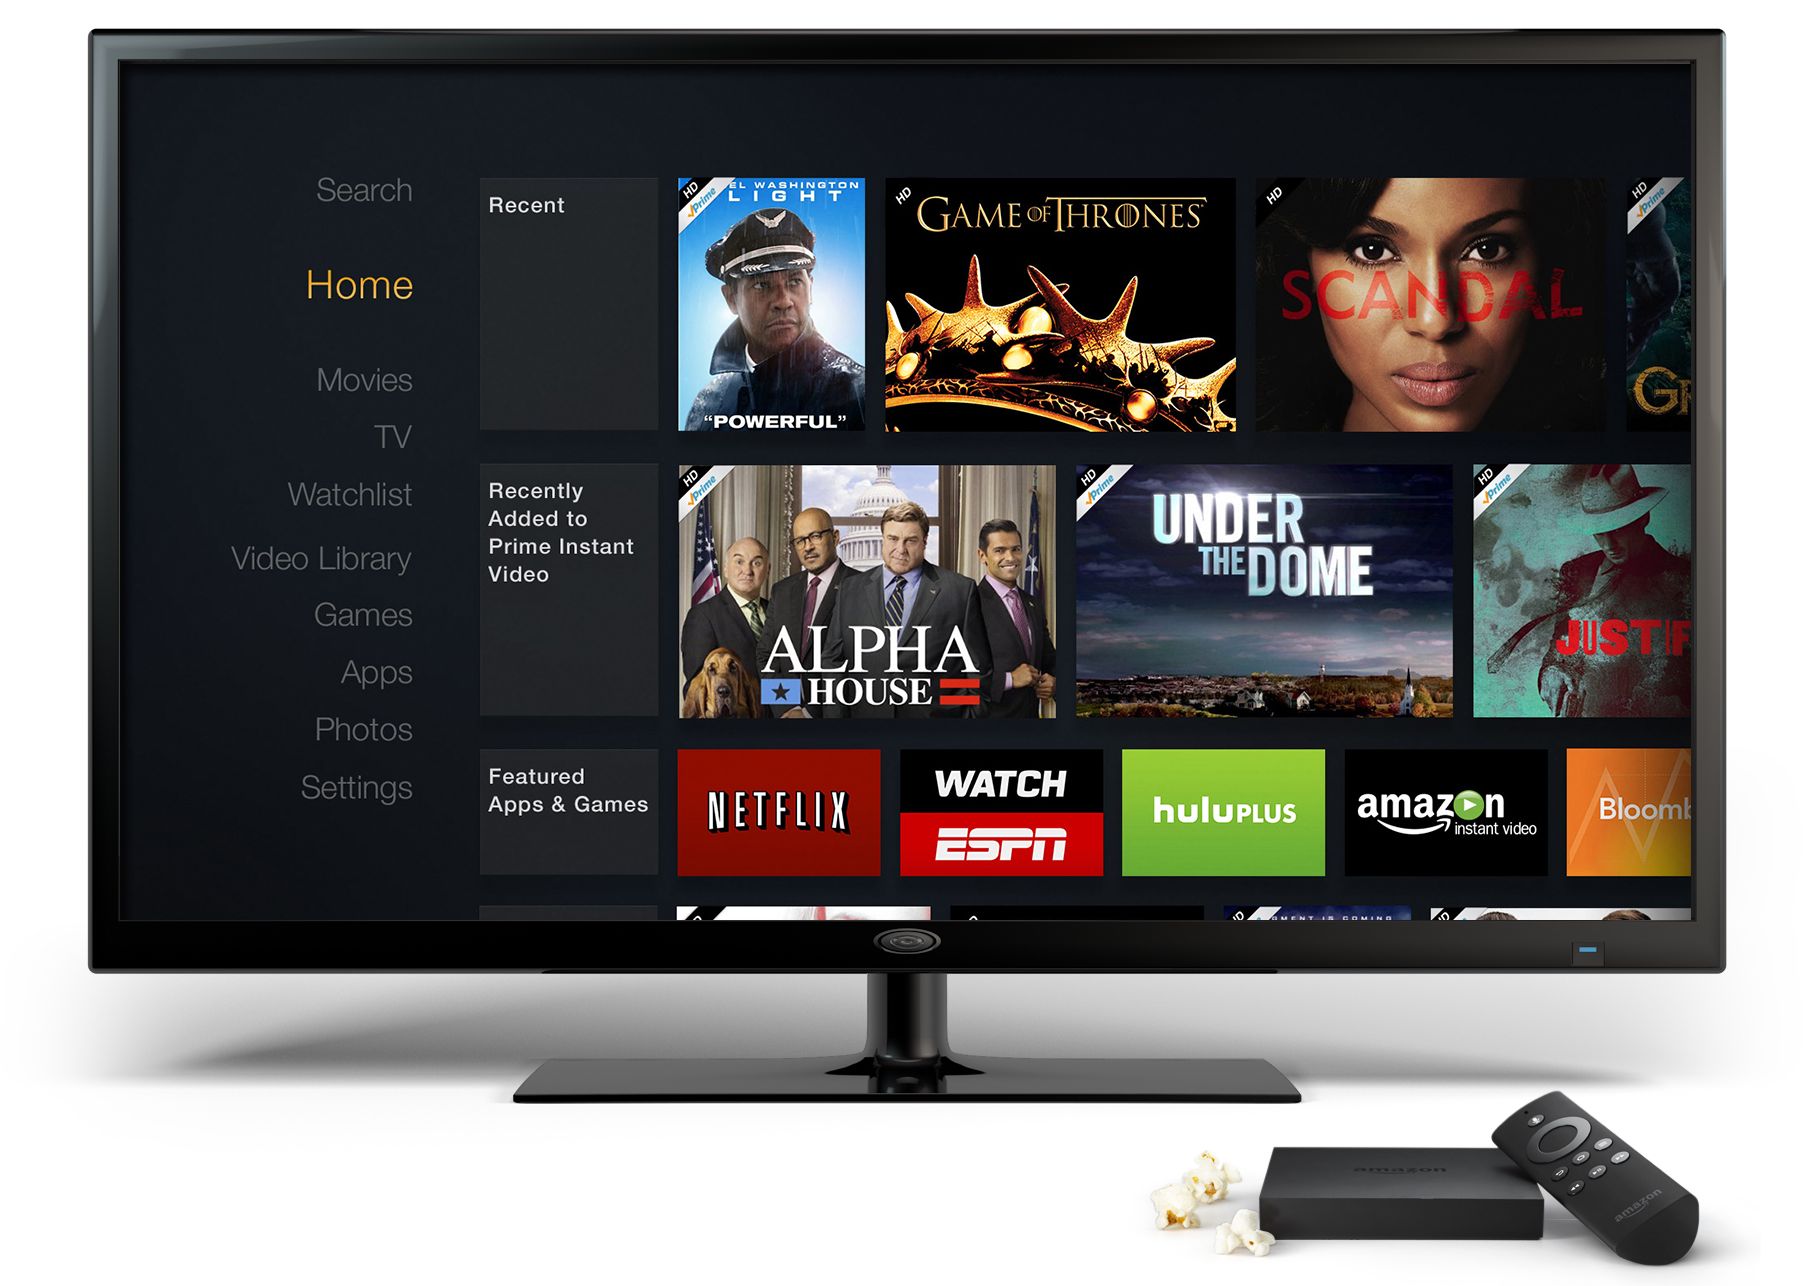 Amazon Fire TV Homescreen